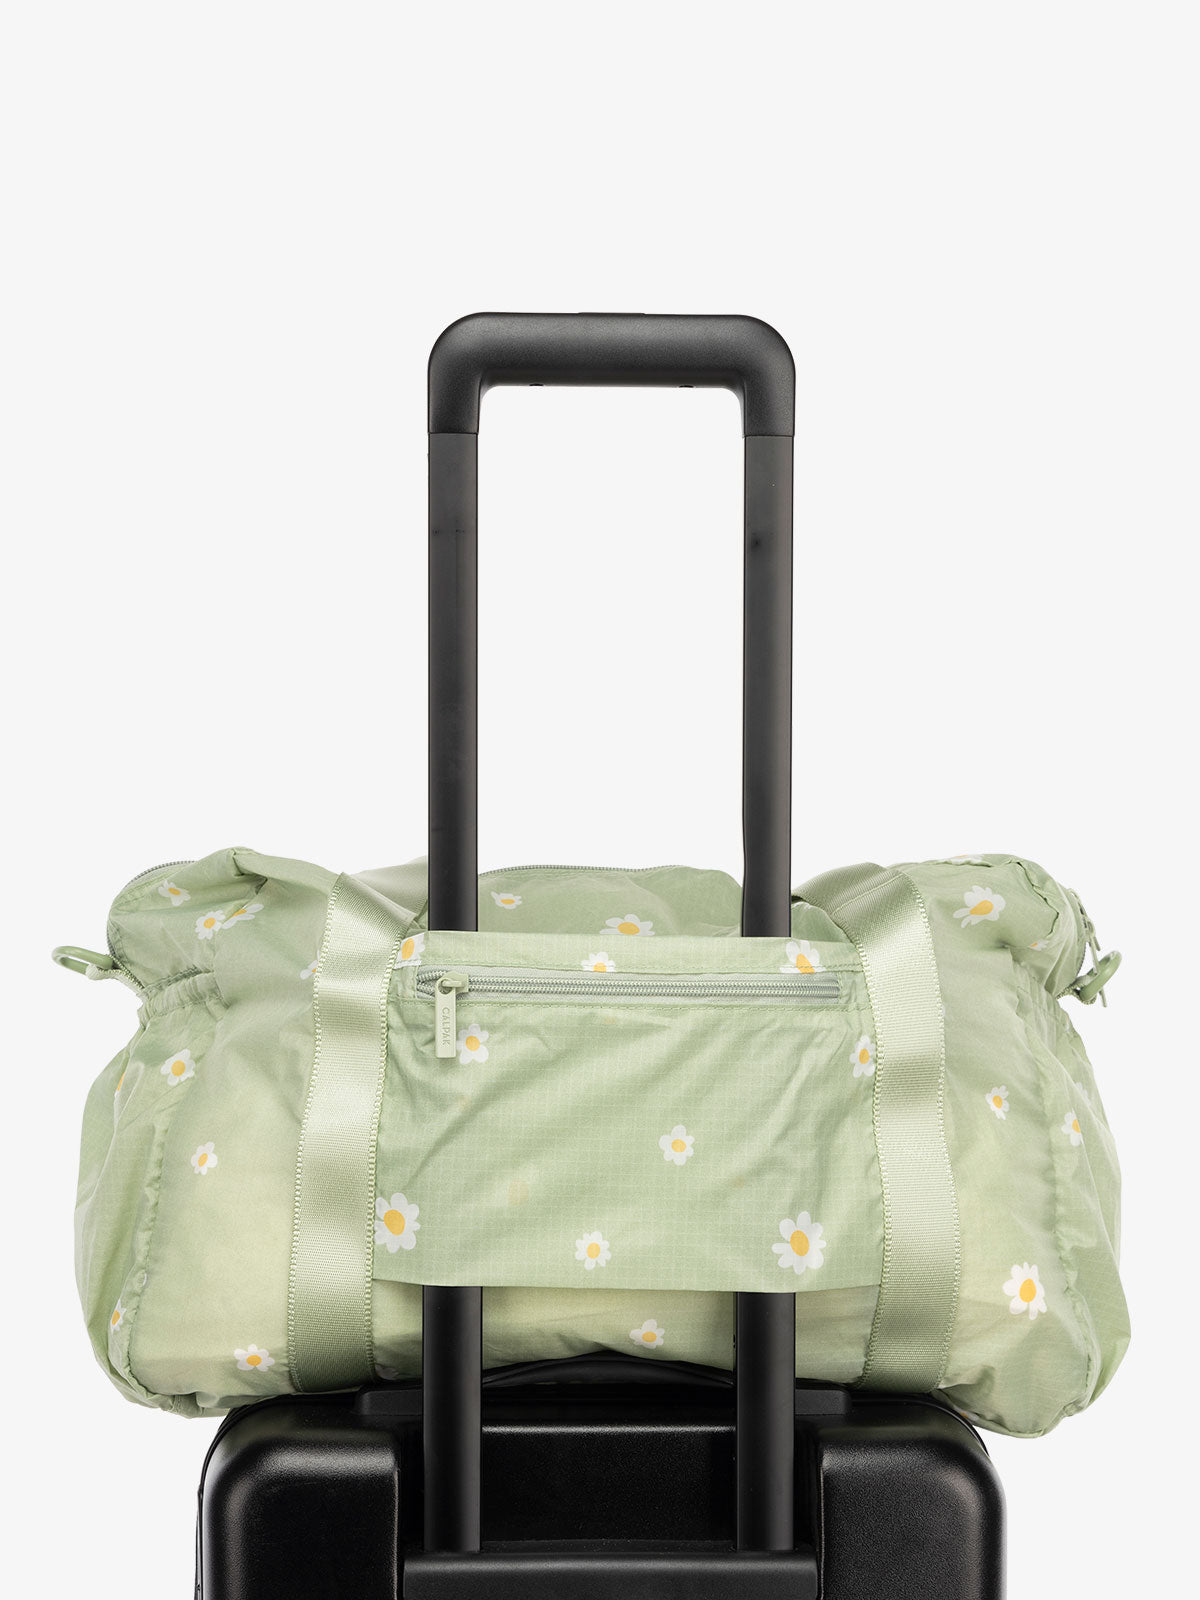 CALPAK Compakt nylon duffle bag with trolley sleeve in daisy